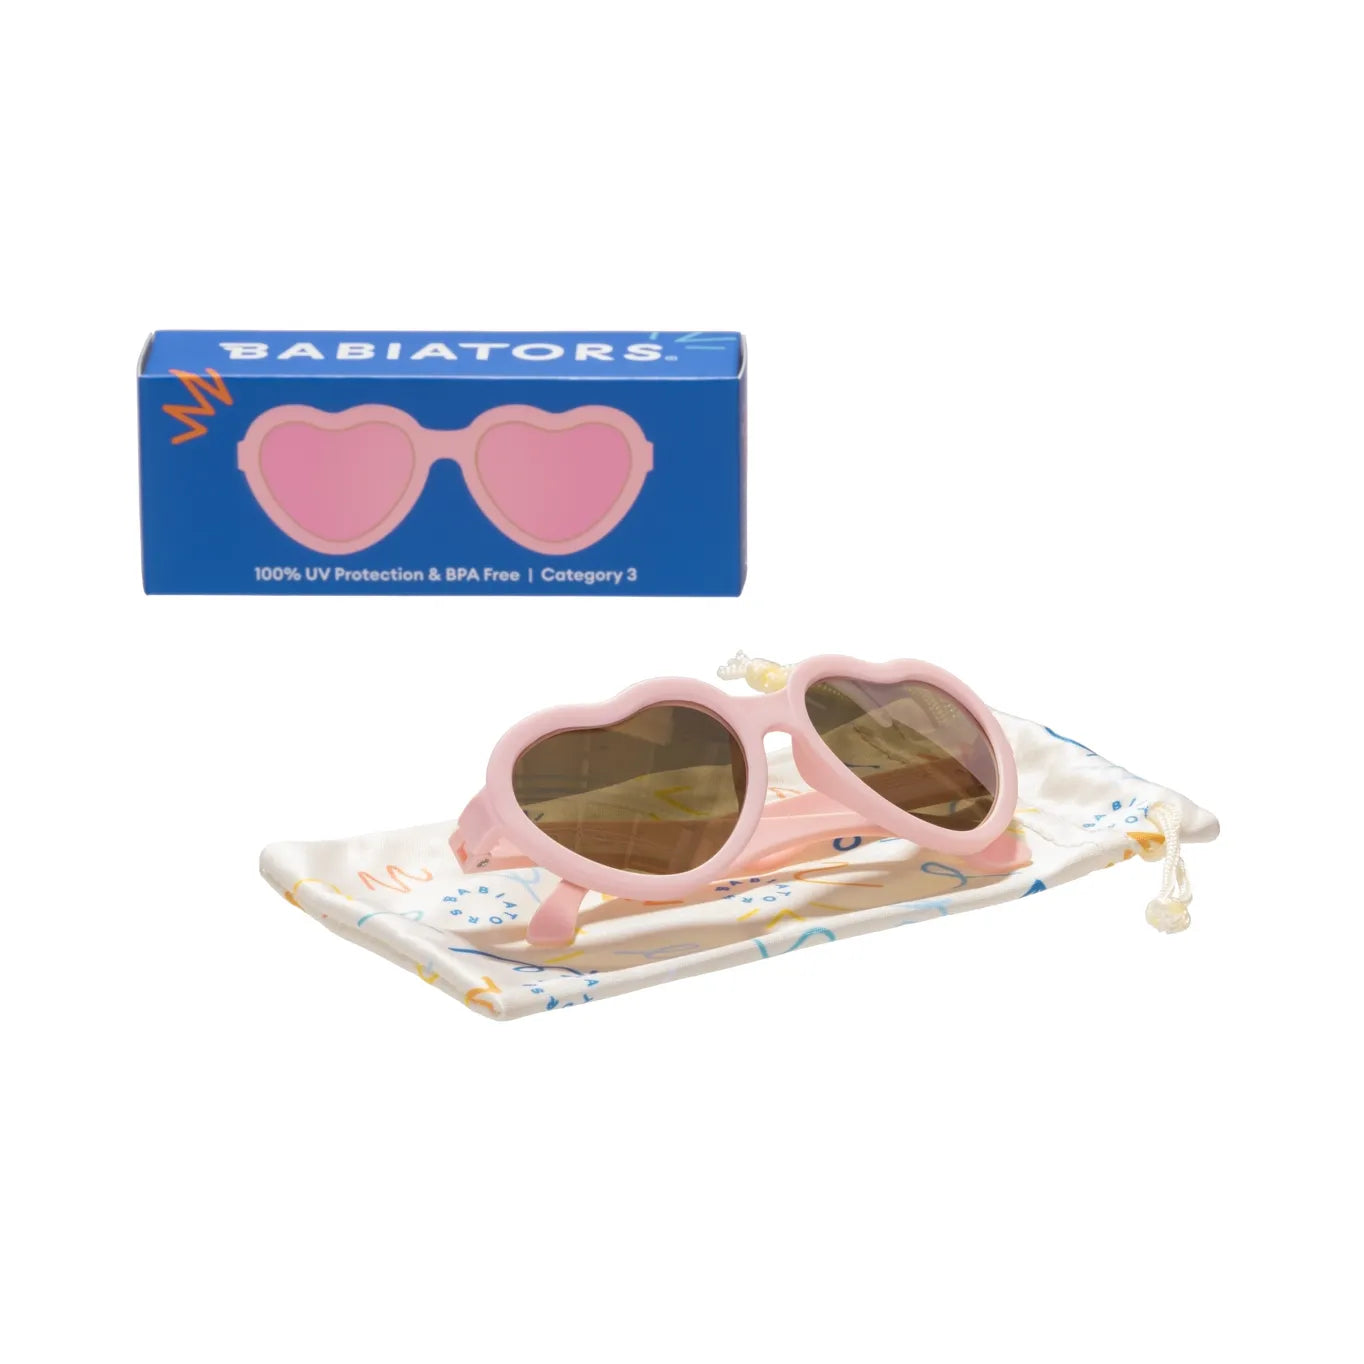 Sunglasses - Ballerina Pink Mirrored Lenses